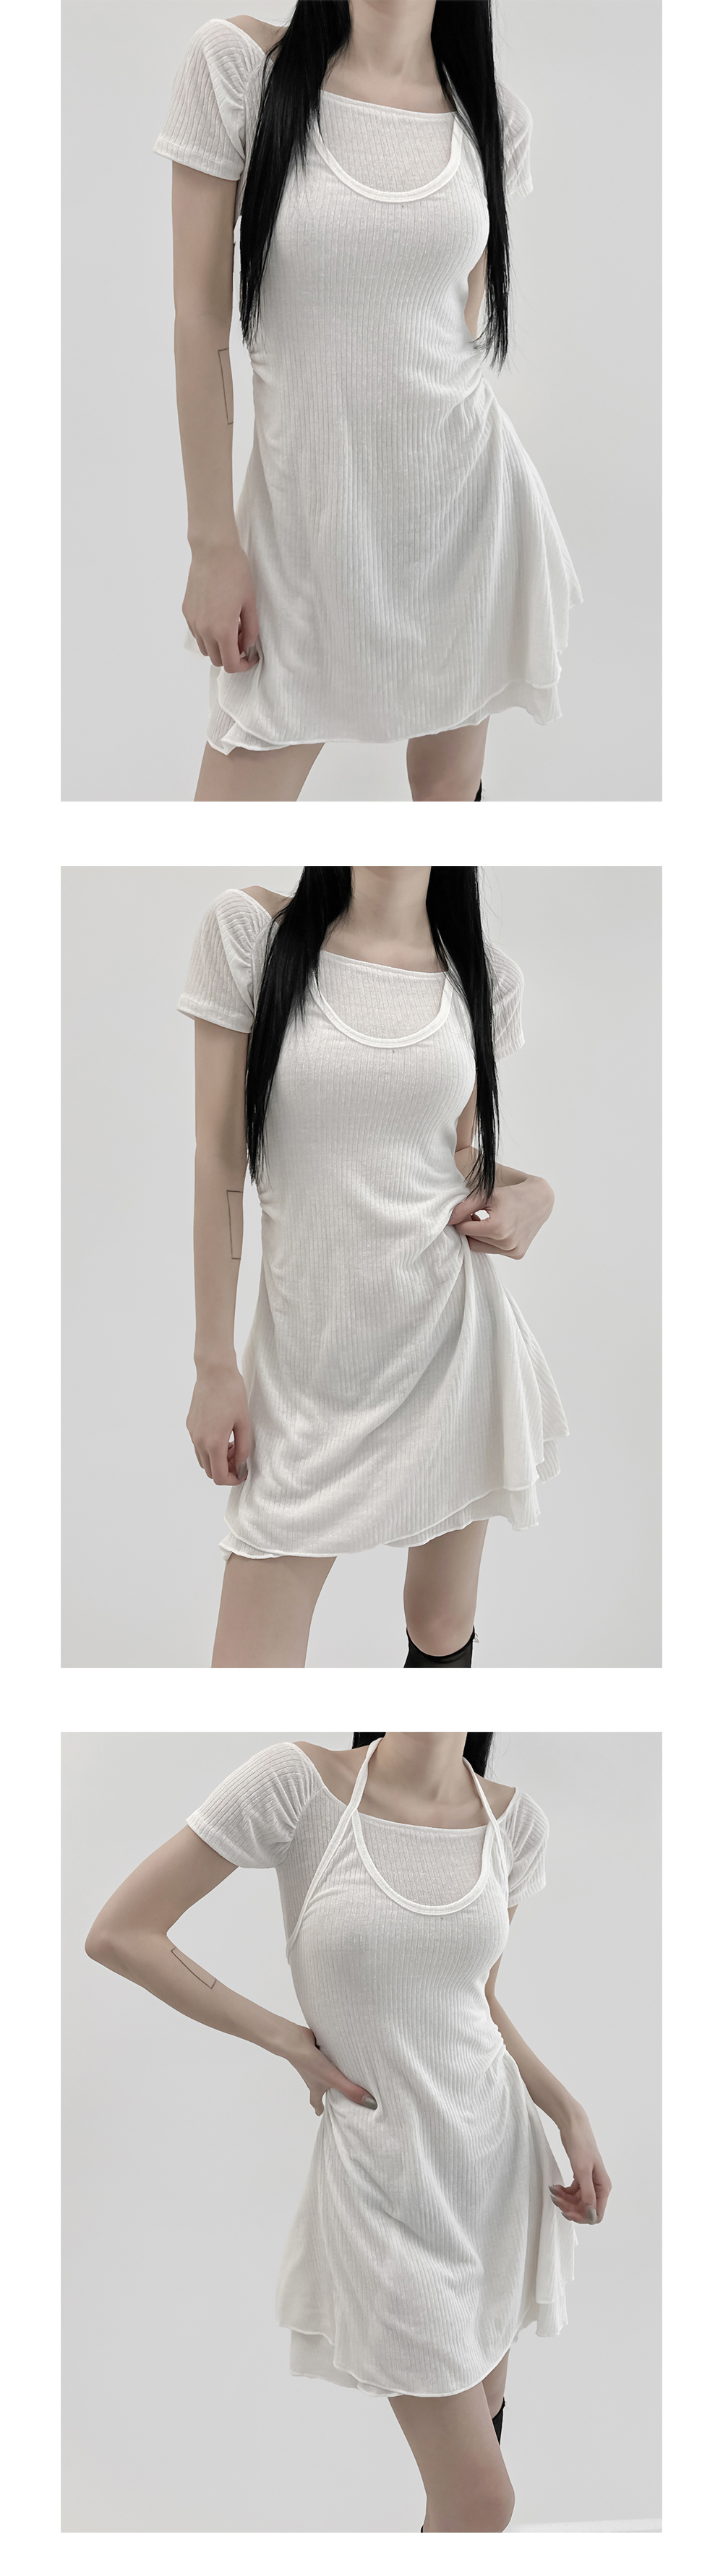 long dress model image-S1L9